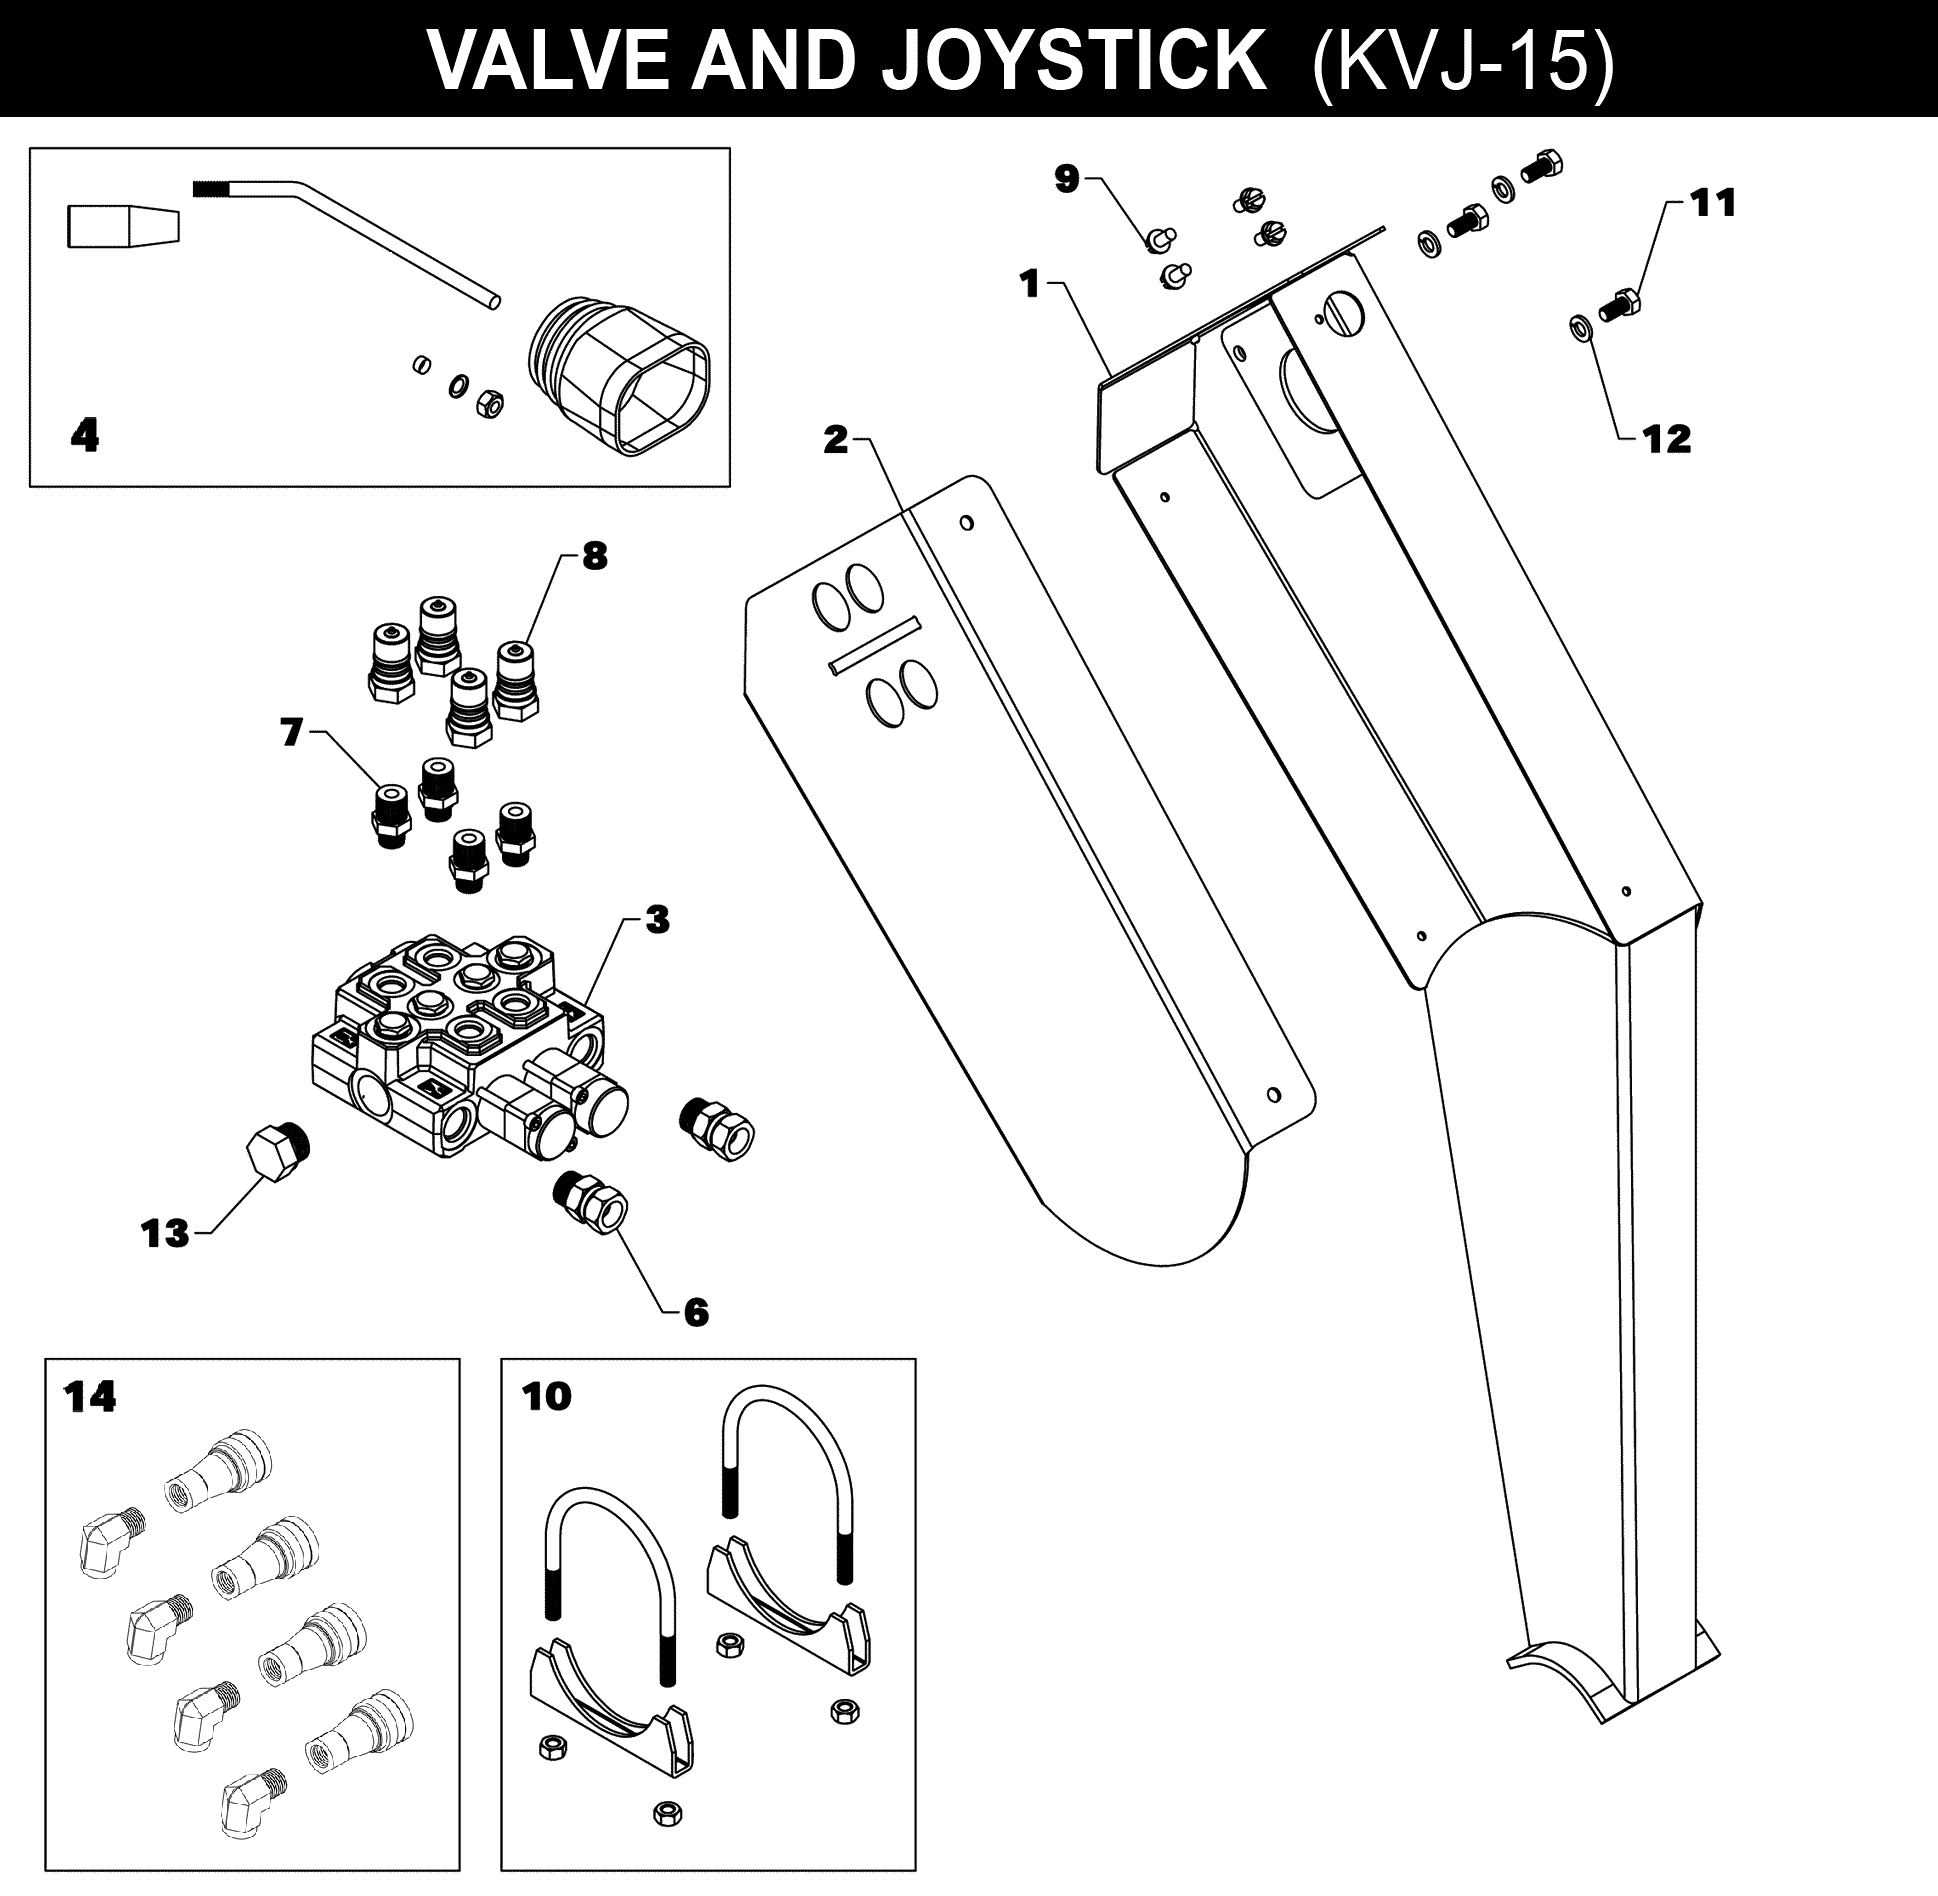 Valve, Joystick & Manifold - KVJ-15